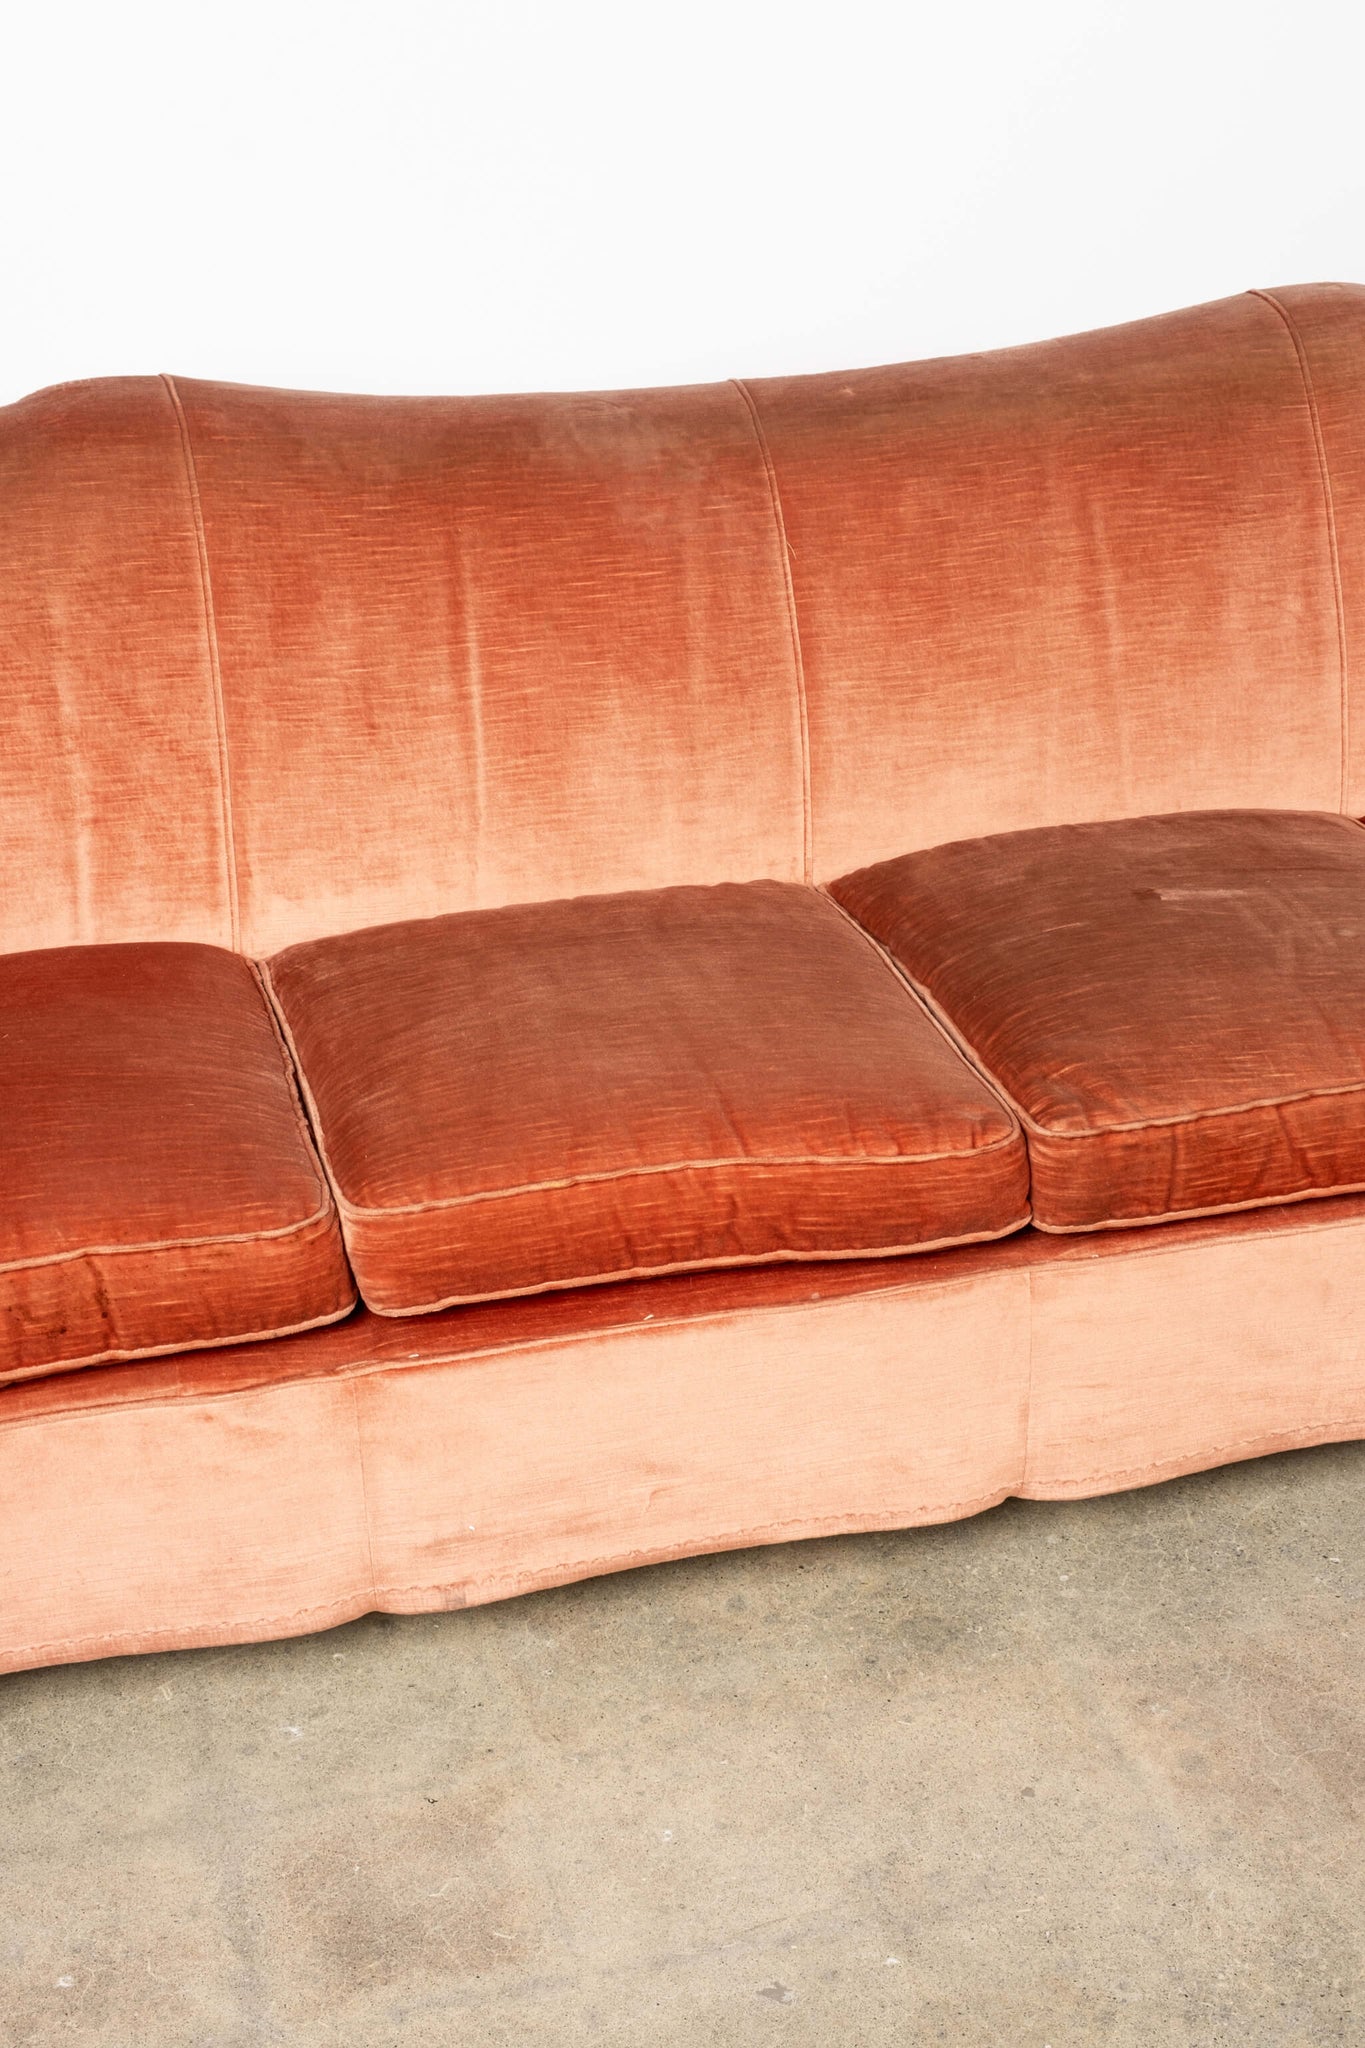 Extremely Rare Vintage Pink Orange Sofa with Curved Frame Detail Casa Giardino Gio Ponti, seat and backrest detail